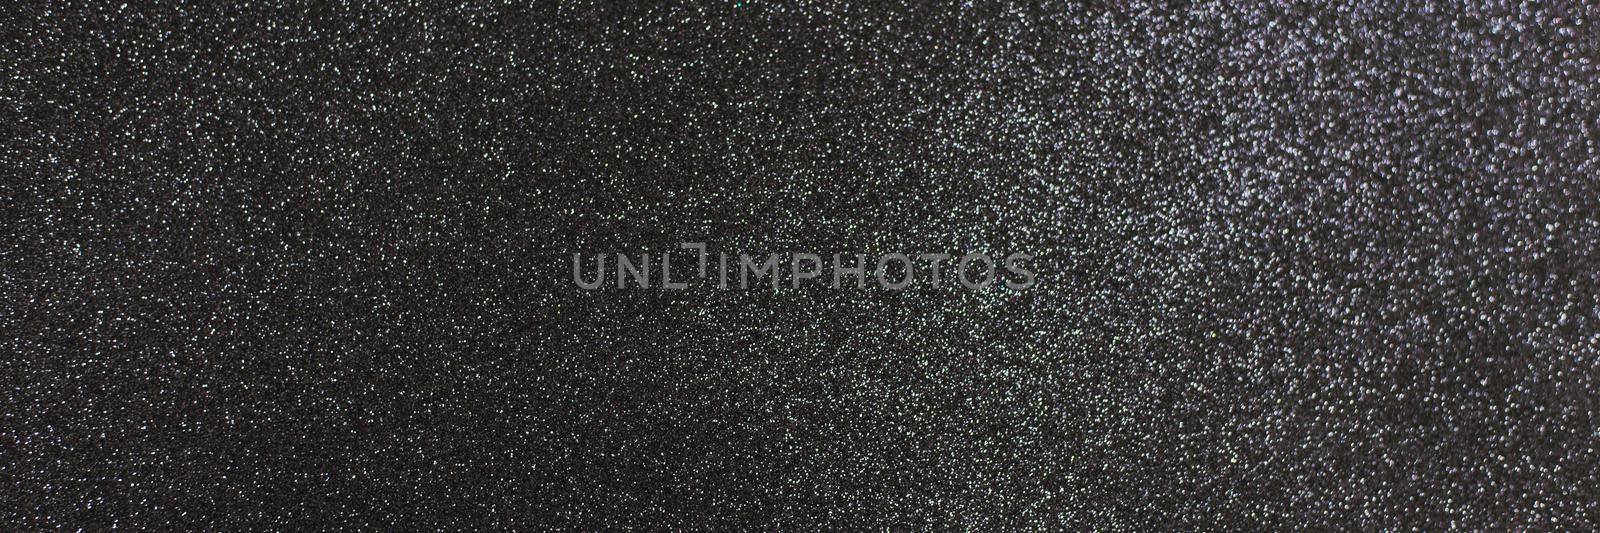 Black shiny background with sparkles. Dark gray abstract festive background. Web banner by etonastenka